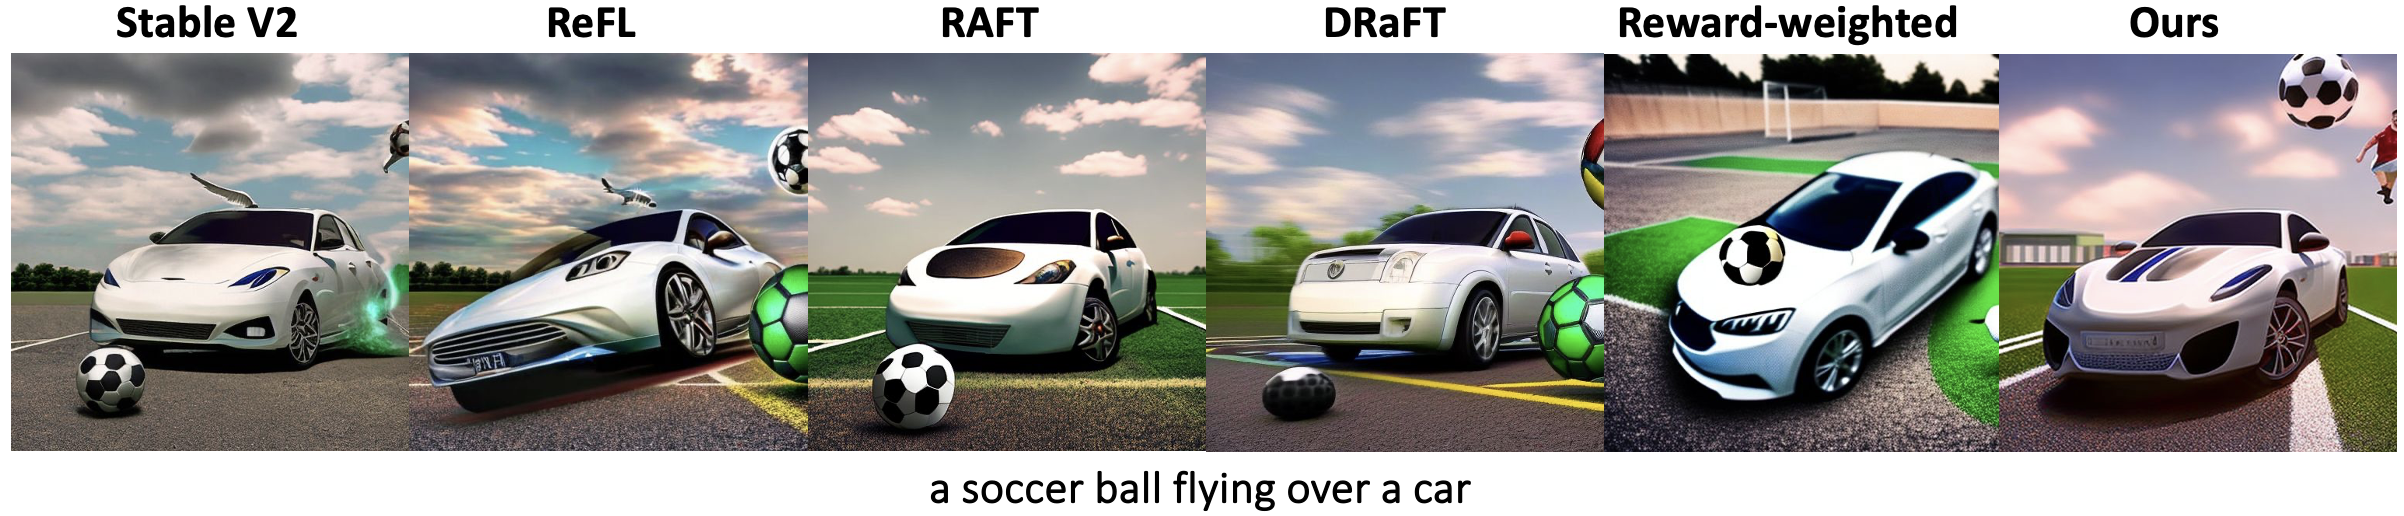 A soccer ball flying over a car